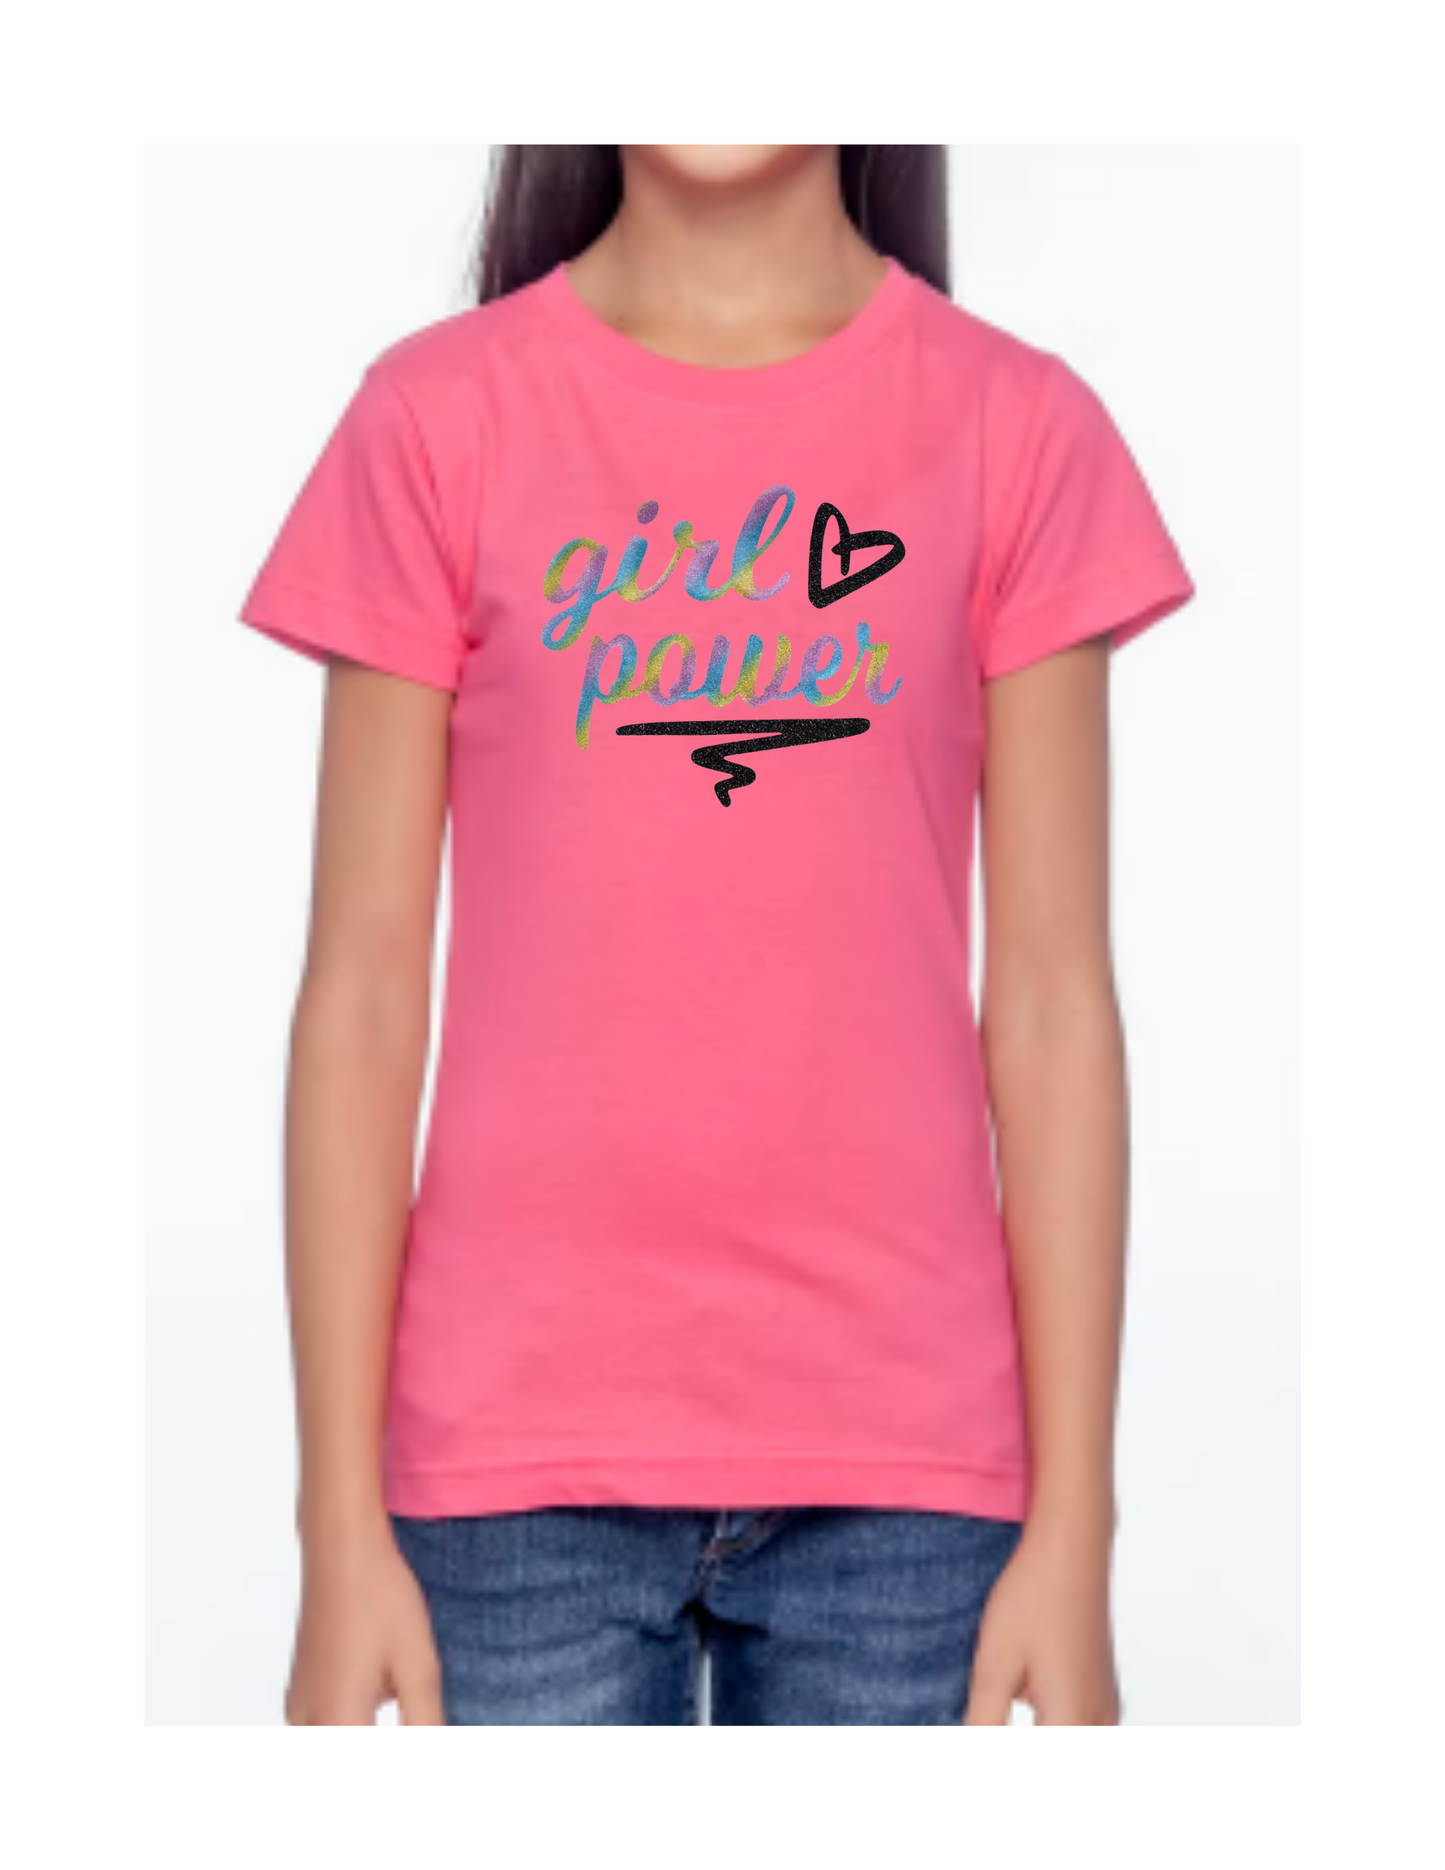 Girl Power - Youth T-shirt